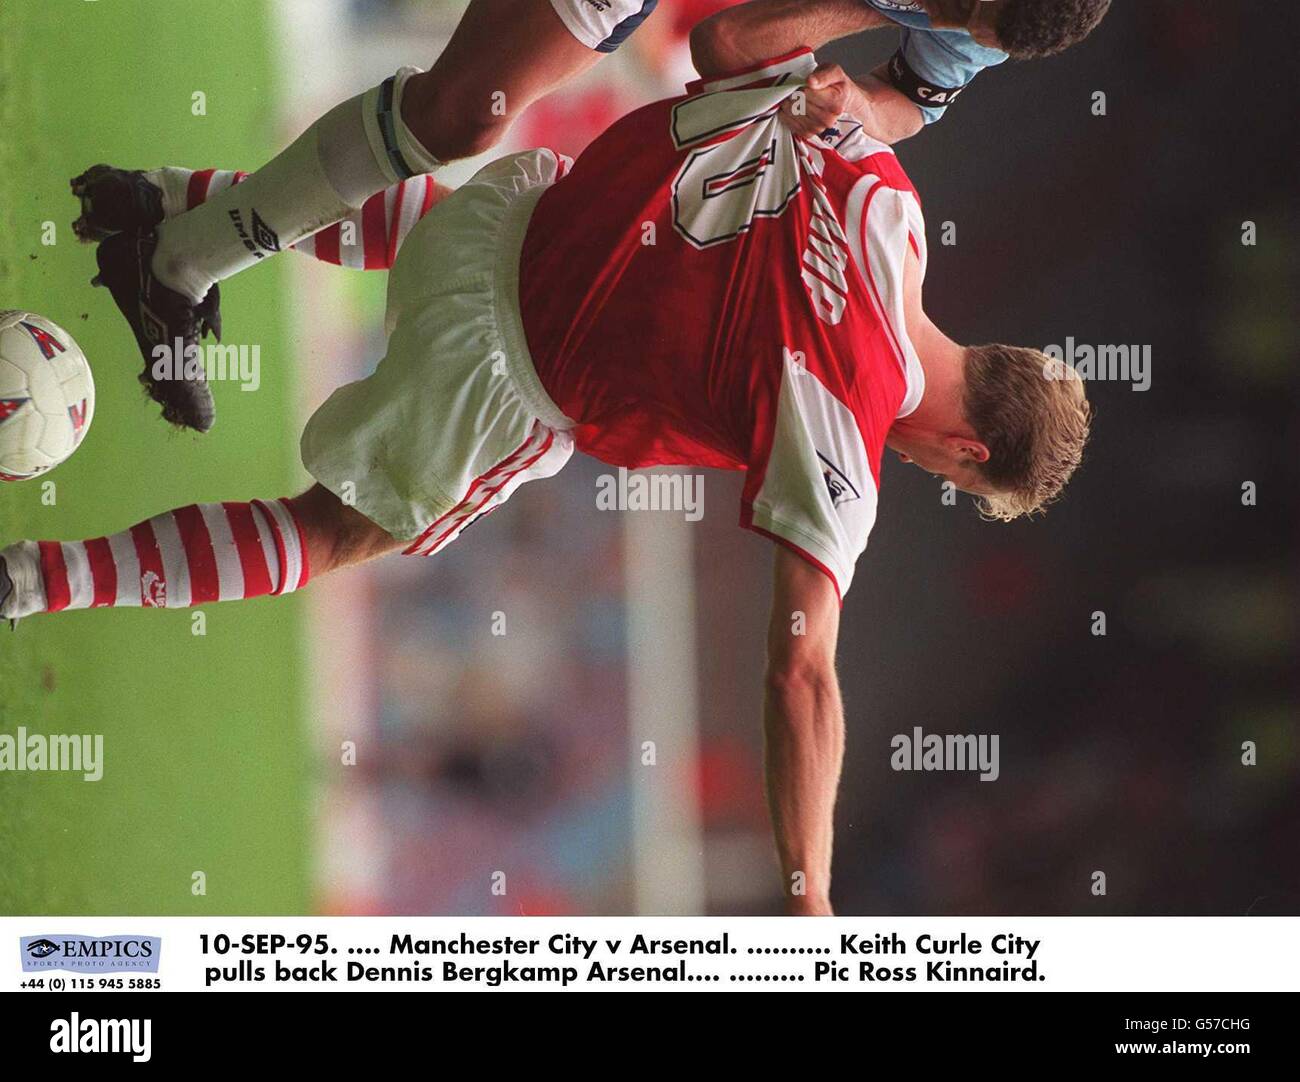 10-SEP-95. .... Manchester City v Arsenal. .......... Keith Curle City pulls back Dennis Bergkamp Arsenal Stock Photo